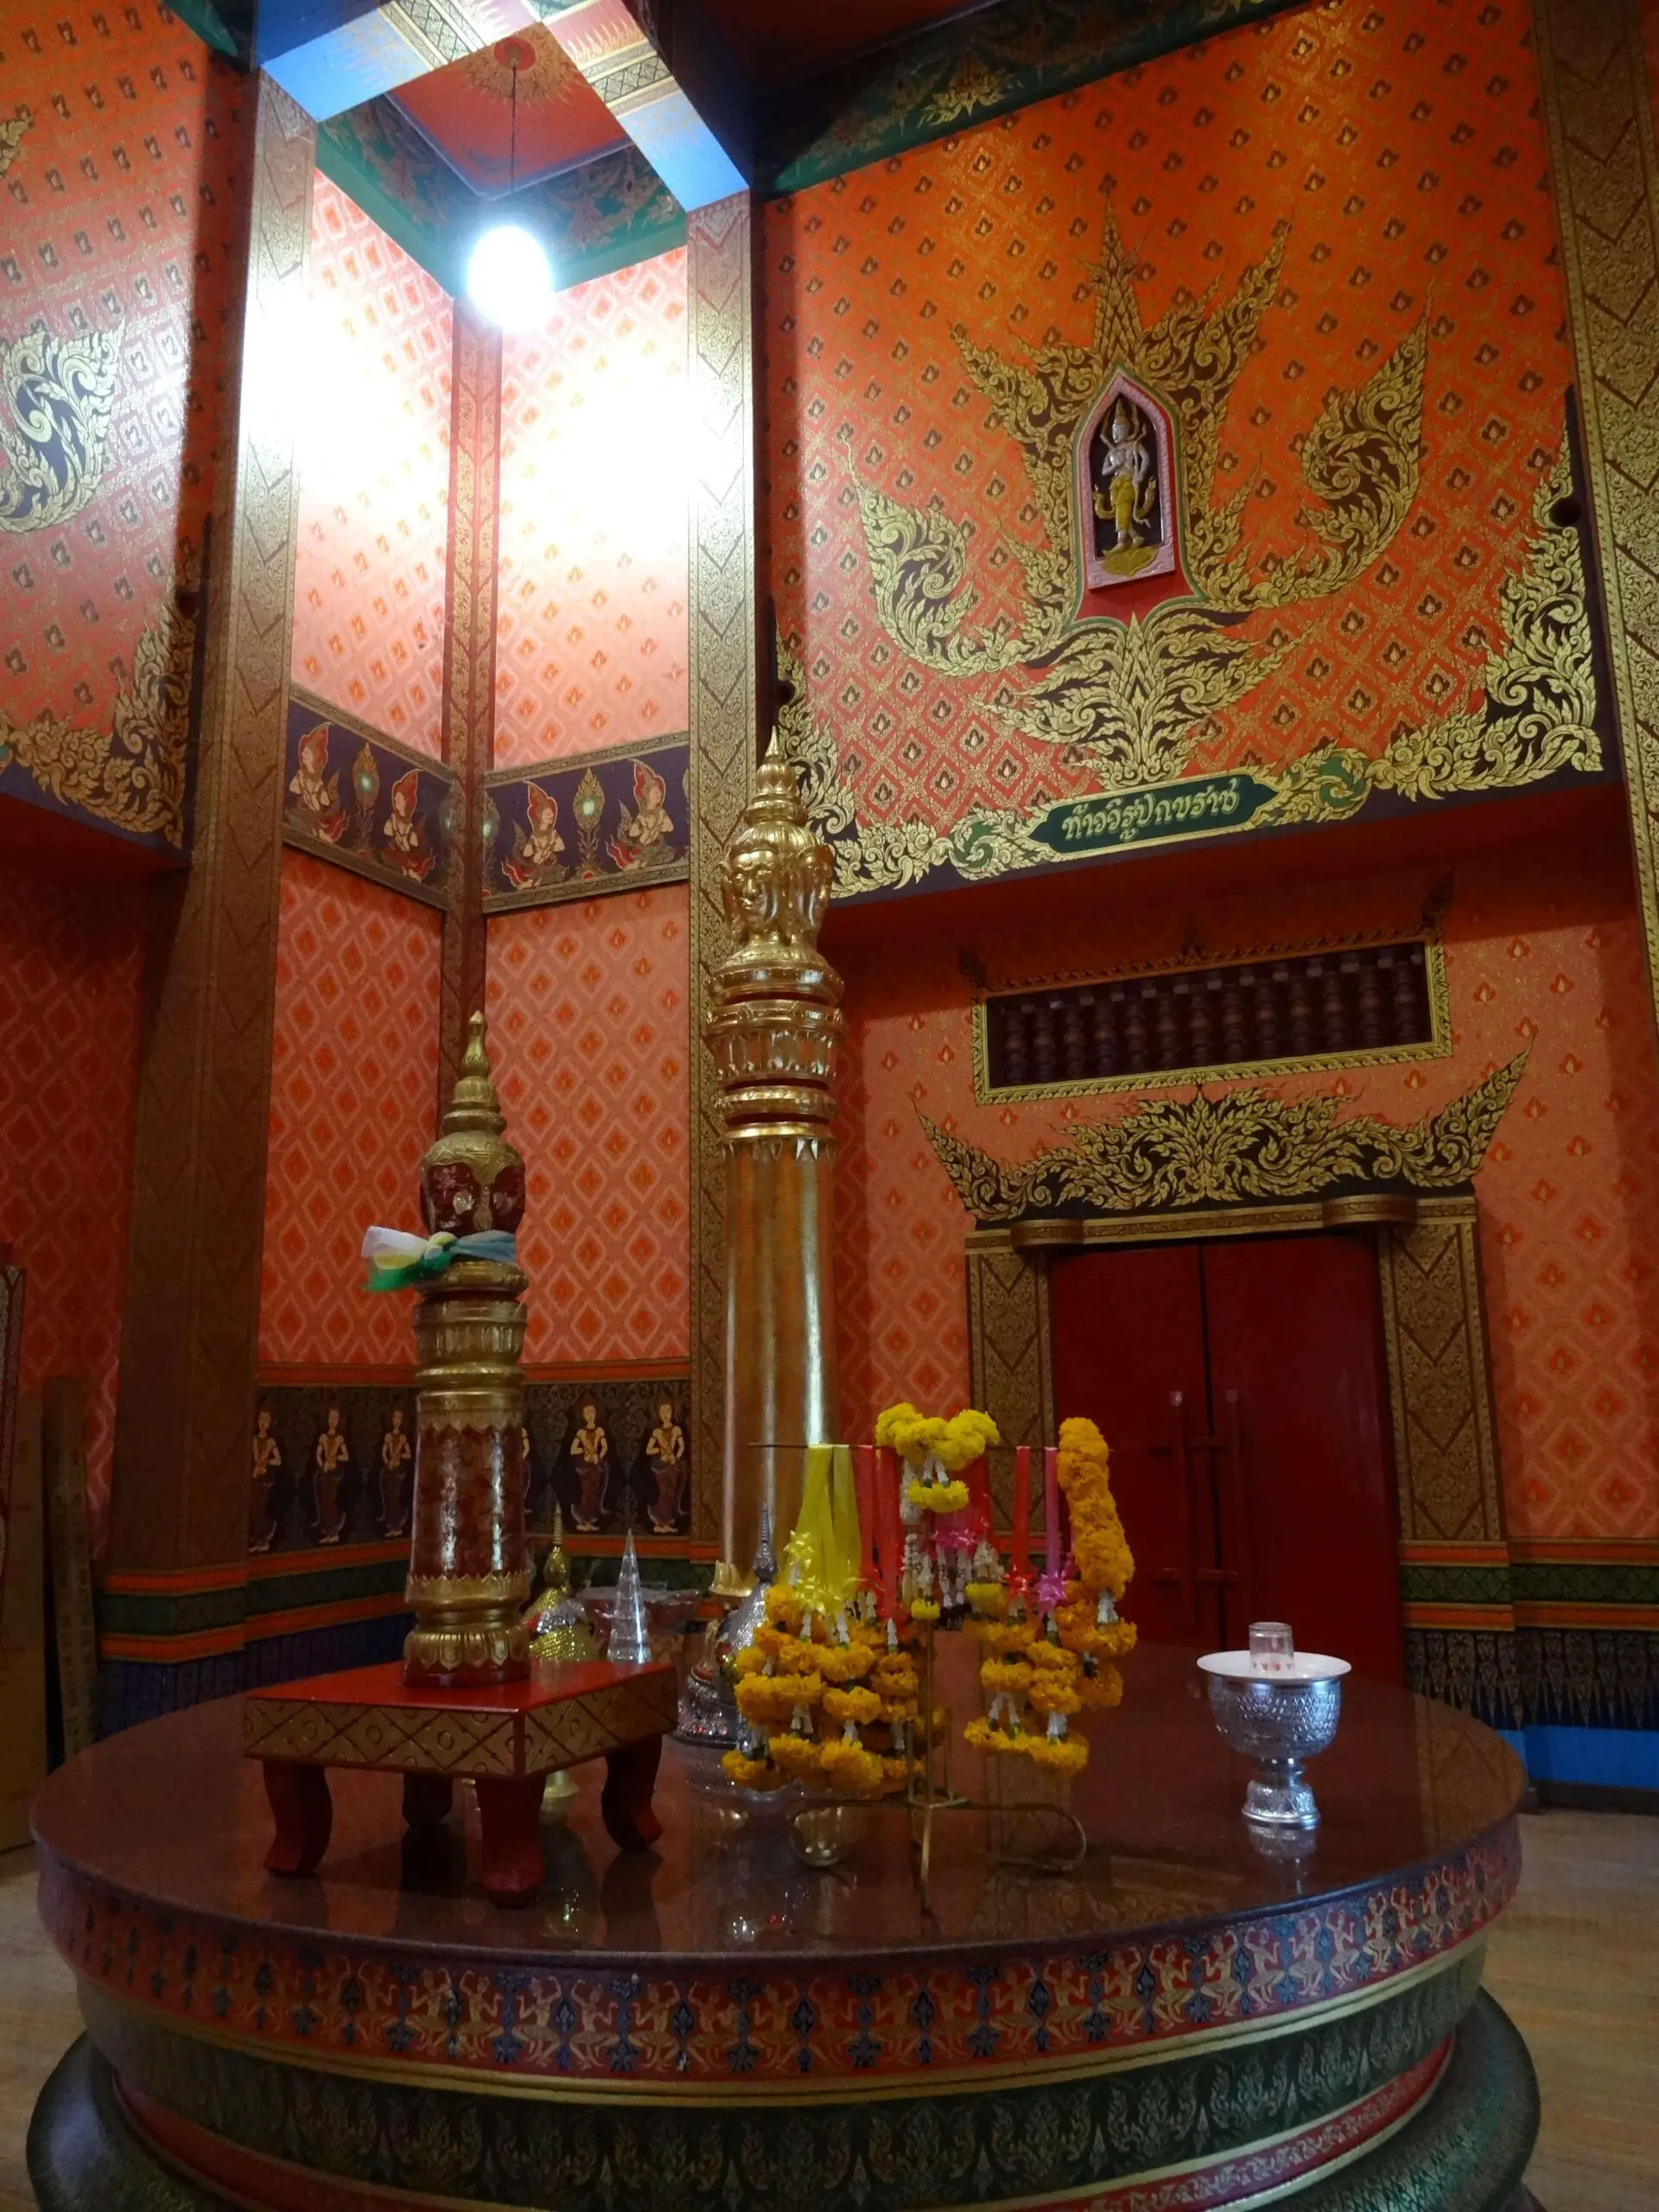 A golden pillar in an orange-painted room